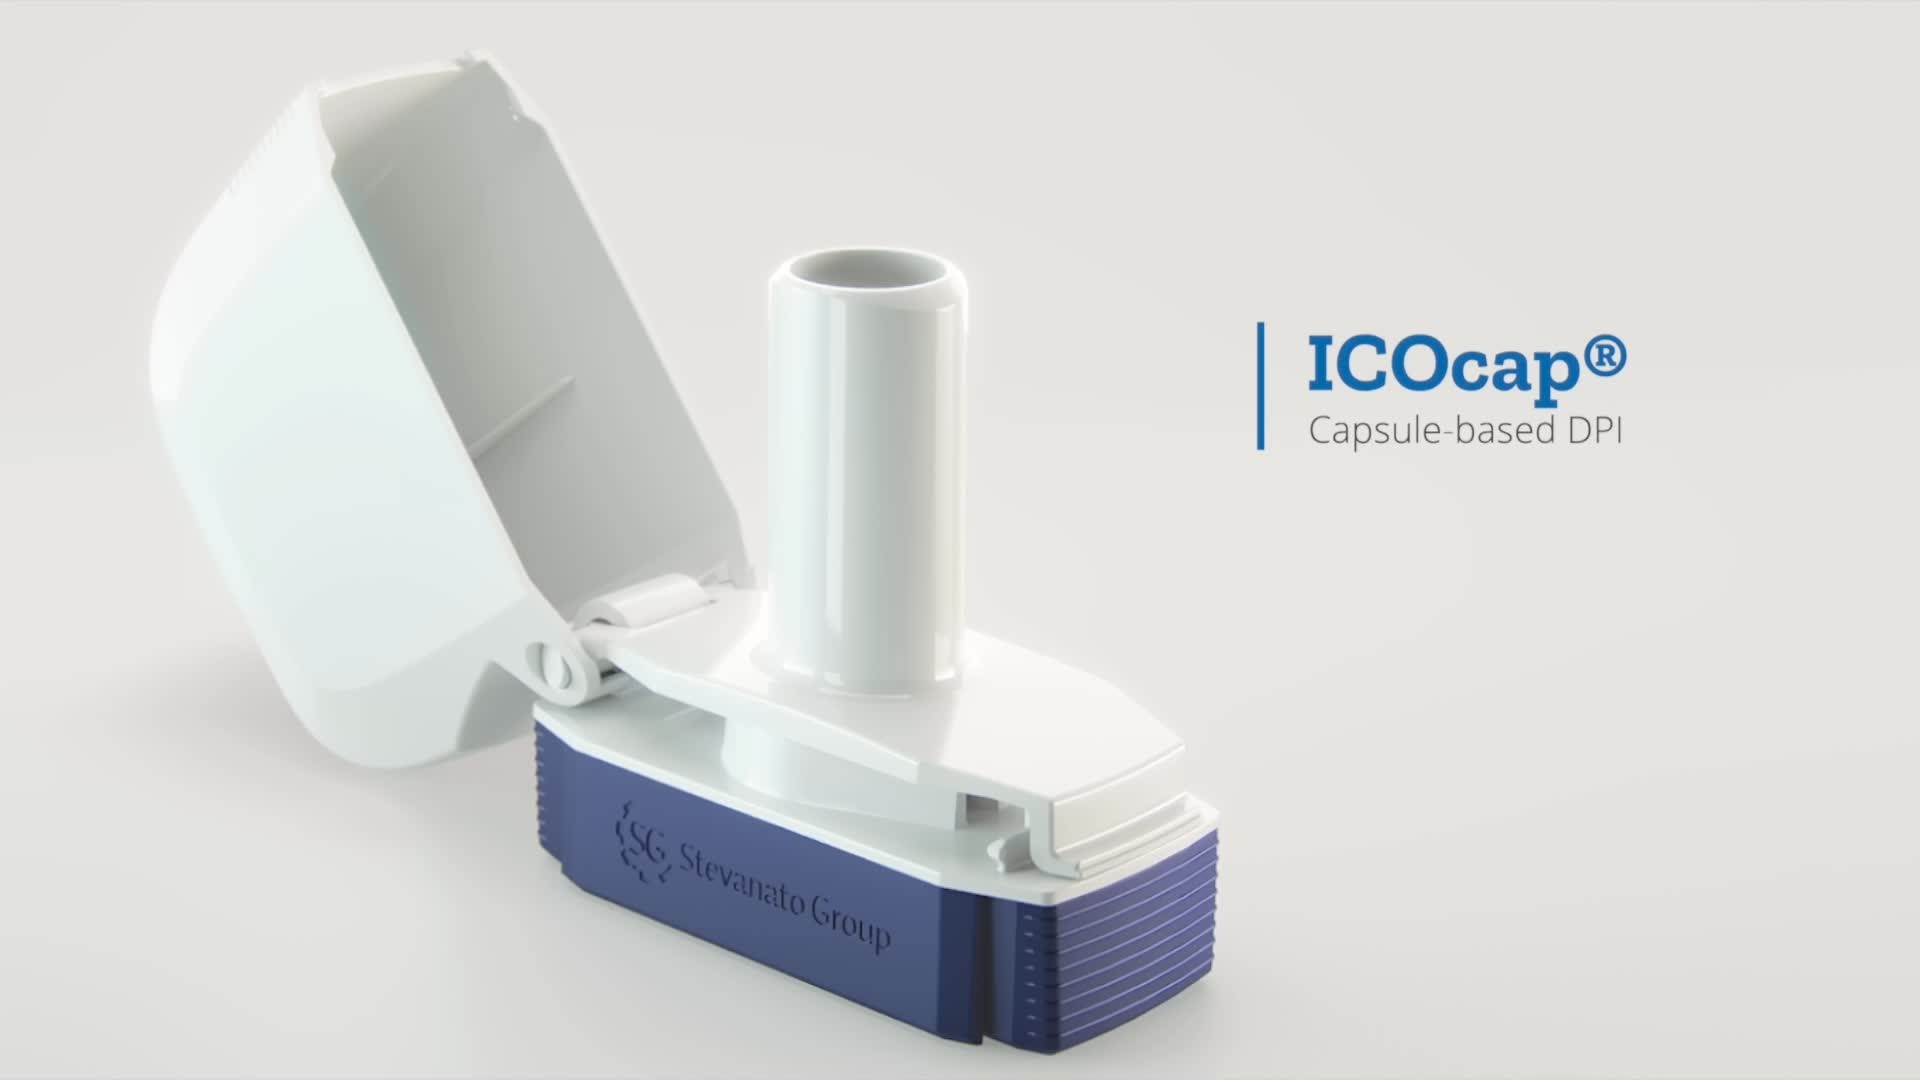 ICOcap® is a capsule-based dry powder inhaler (DPI)